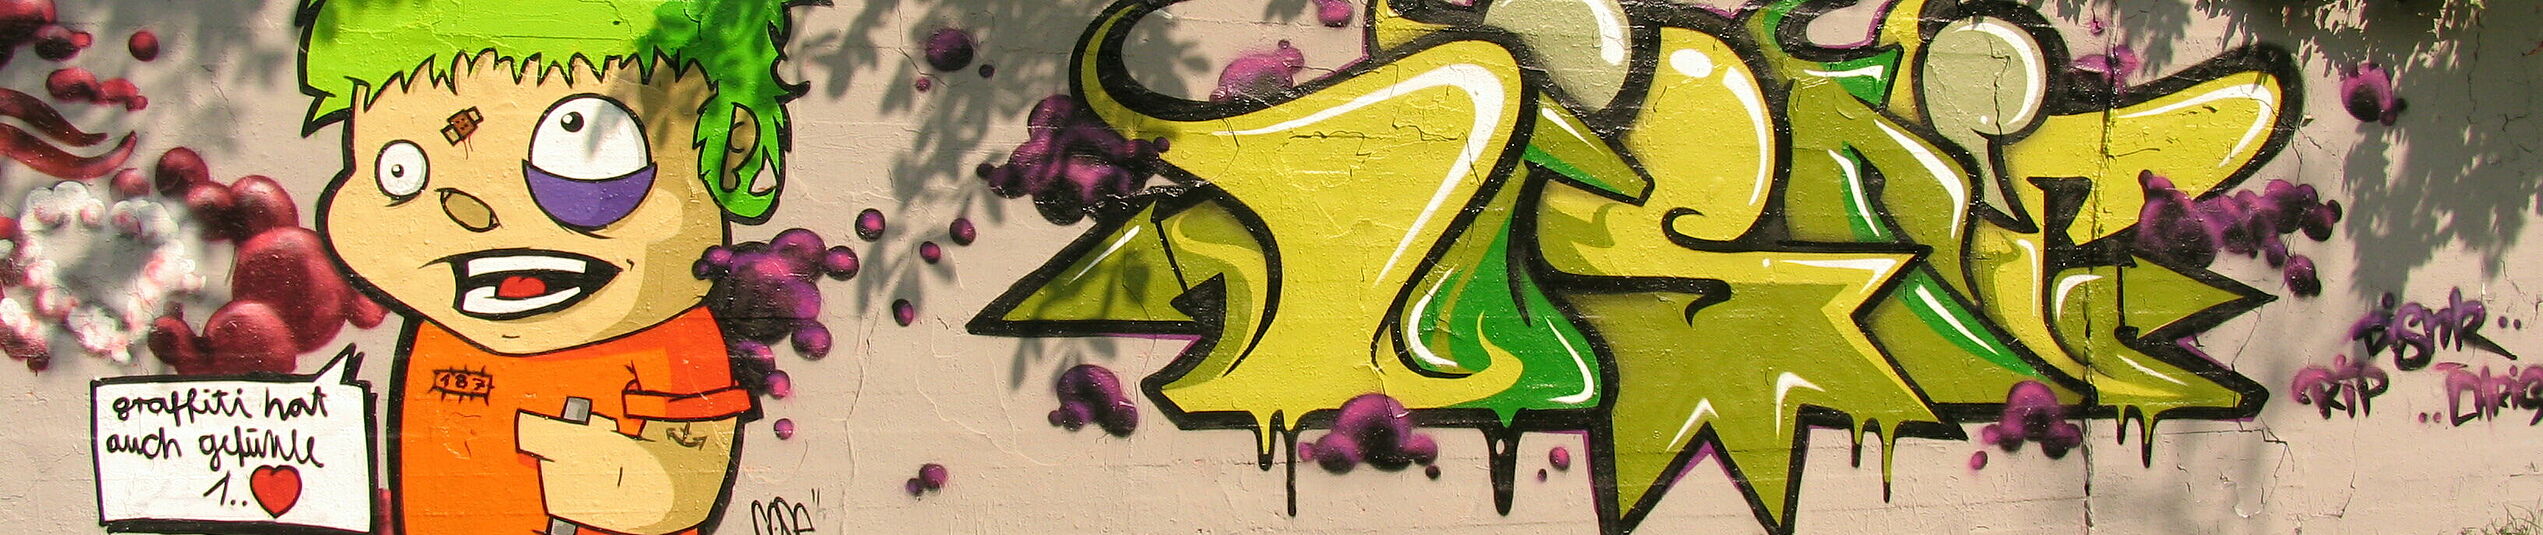 Graffiti "graffiti hat auch gefhle"